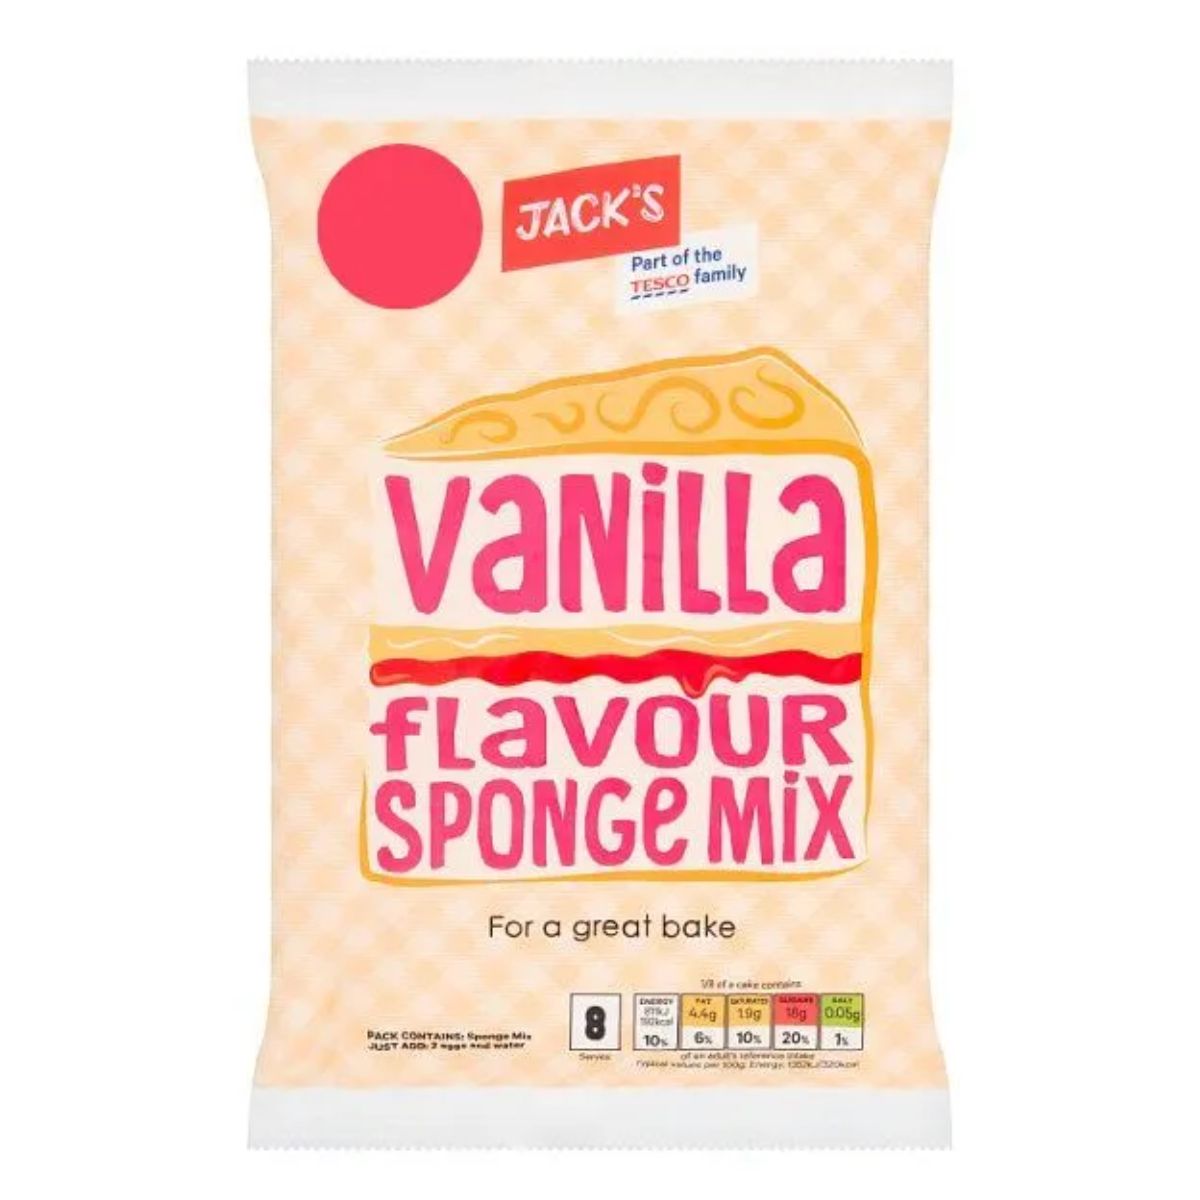 Jacks - Vanilla Flavour Sponge Mix - 400g